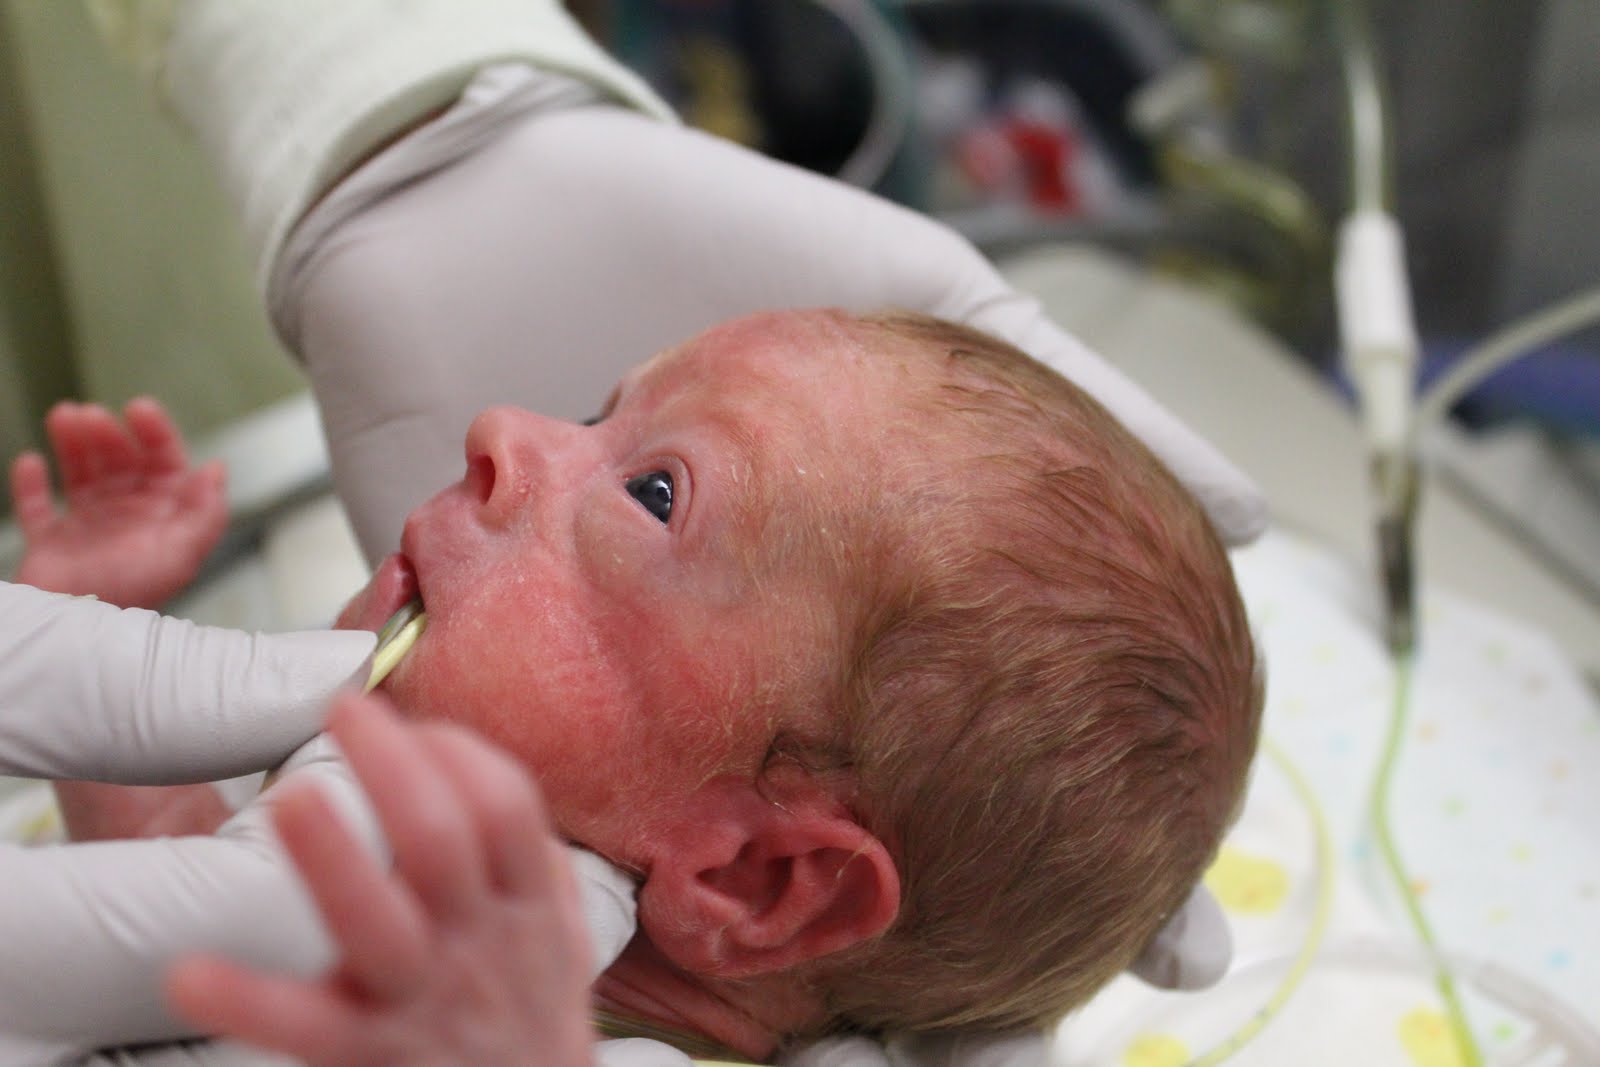 32 Week Old Baby Brain Development: Understanding Growth and Milestones